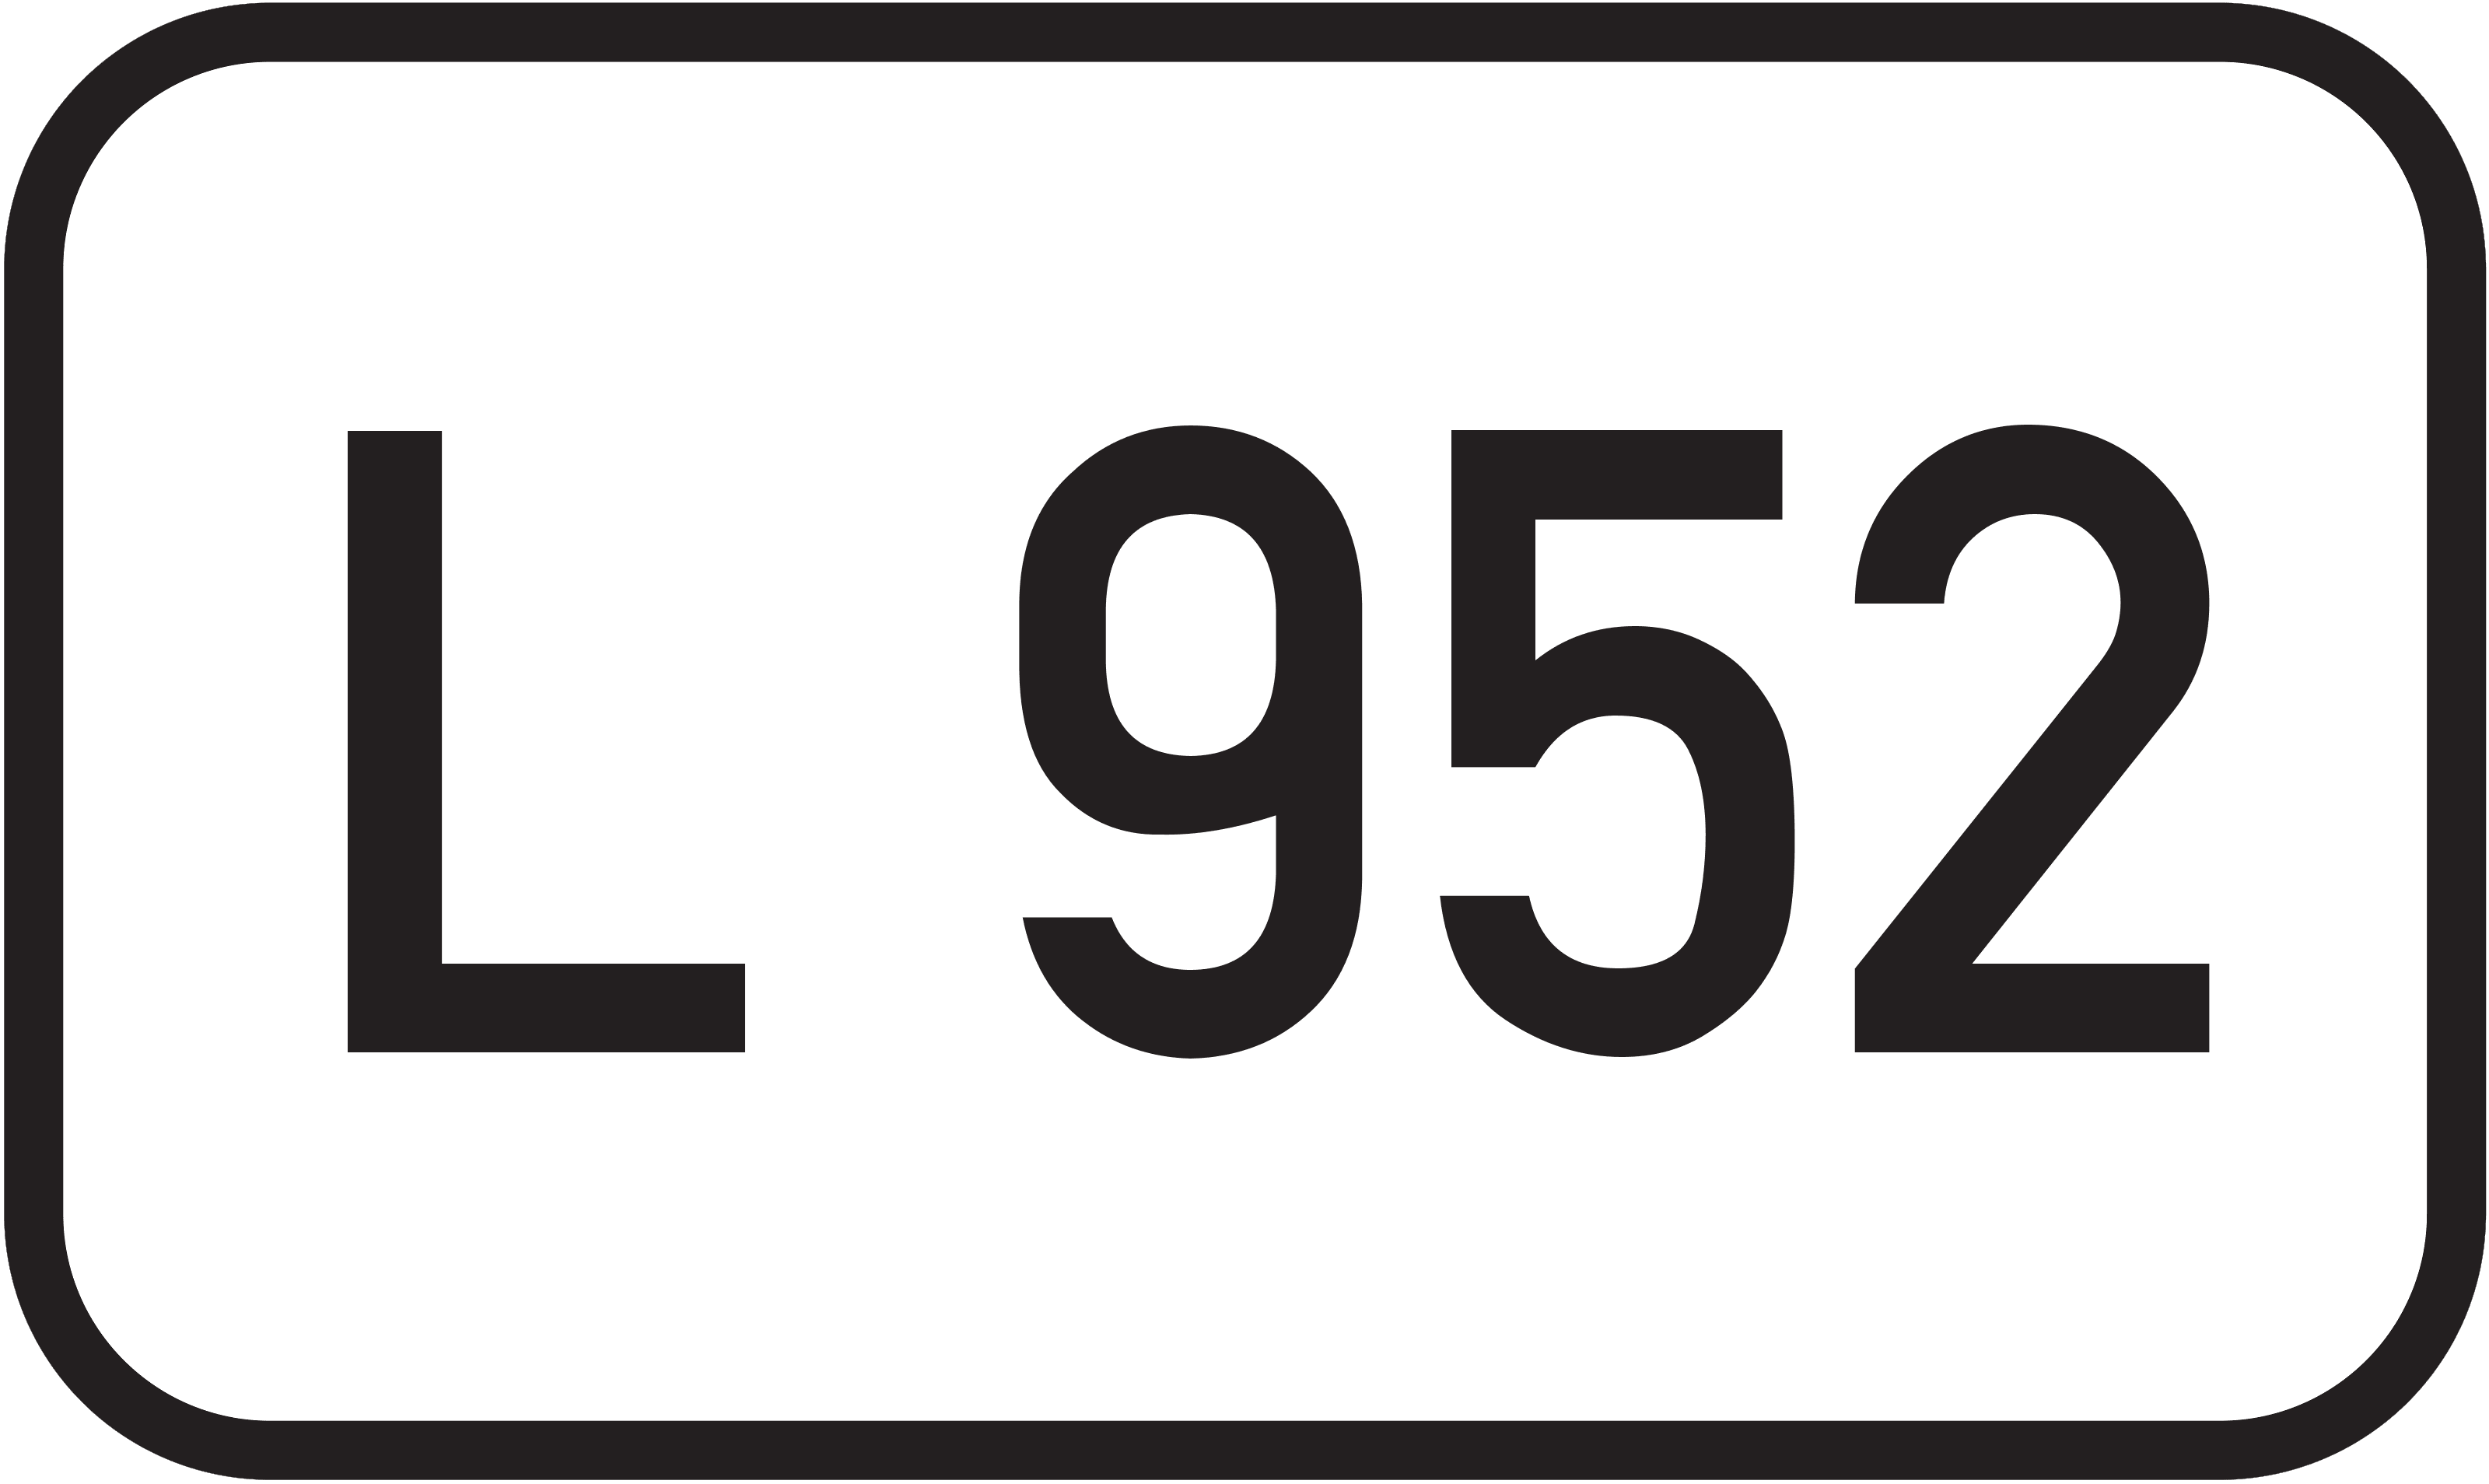 Straßenschild Landesstraße L 952